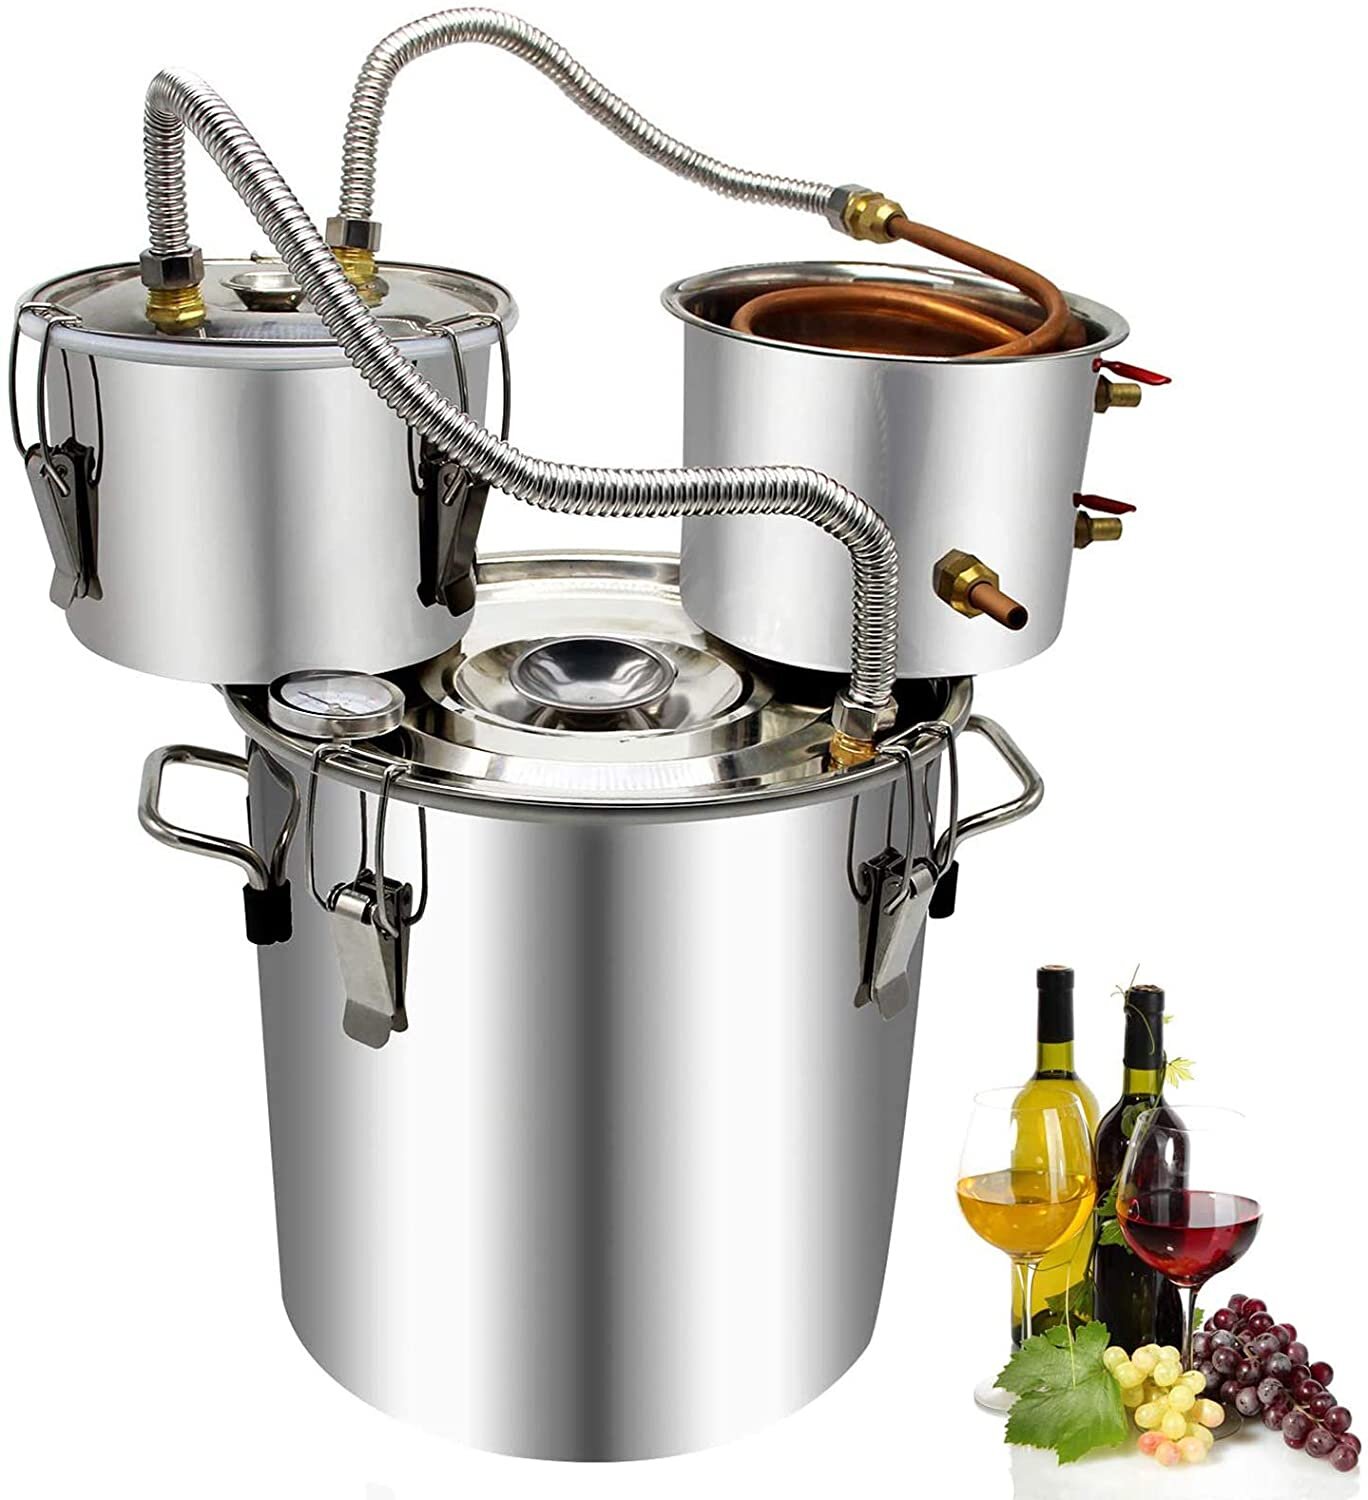 Alcohol Distiller Moonshine Distillery Water Wine Brewing Kit DIY